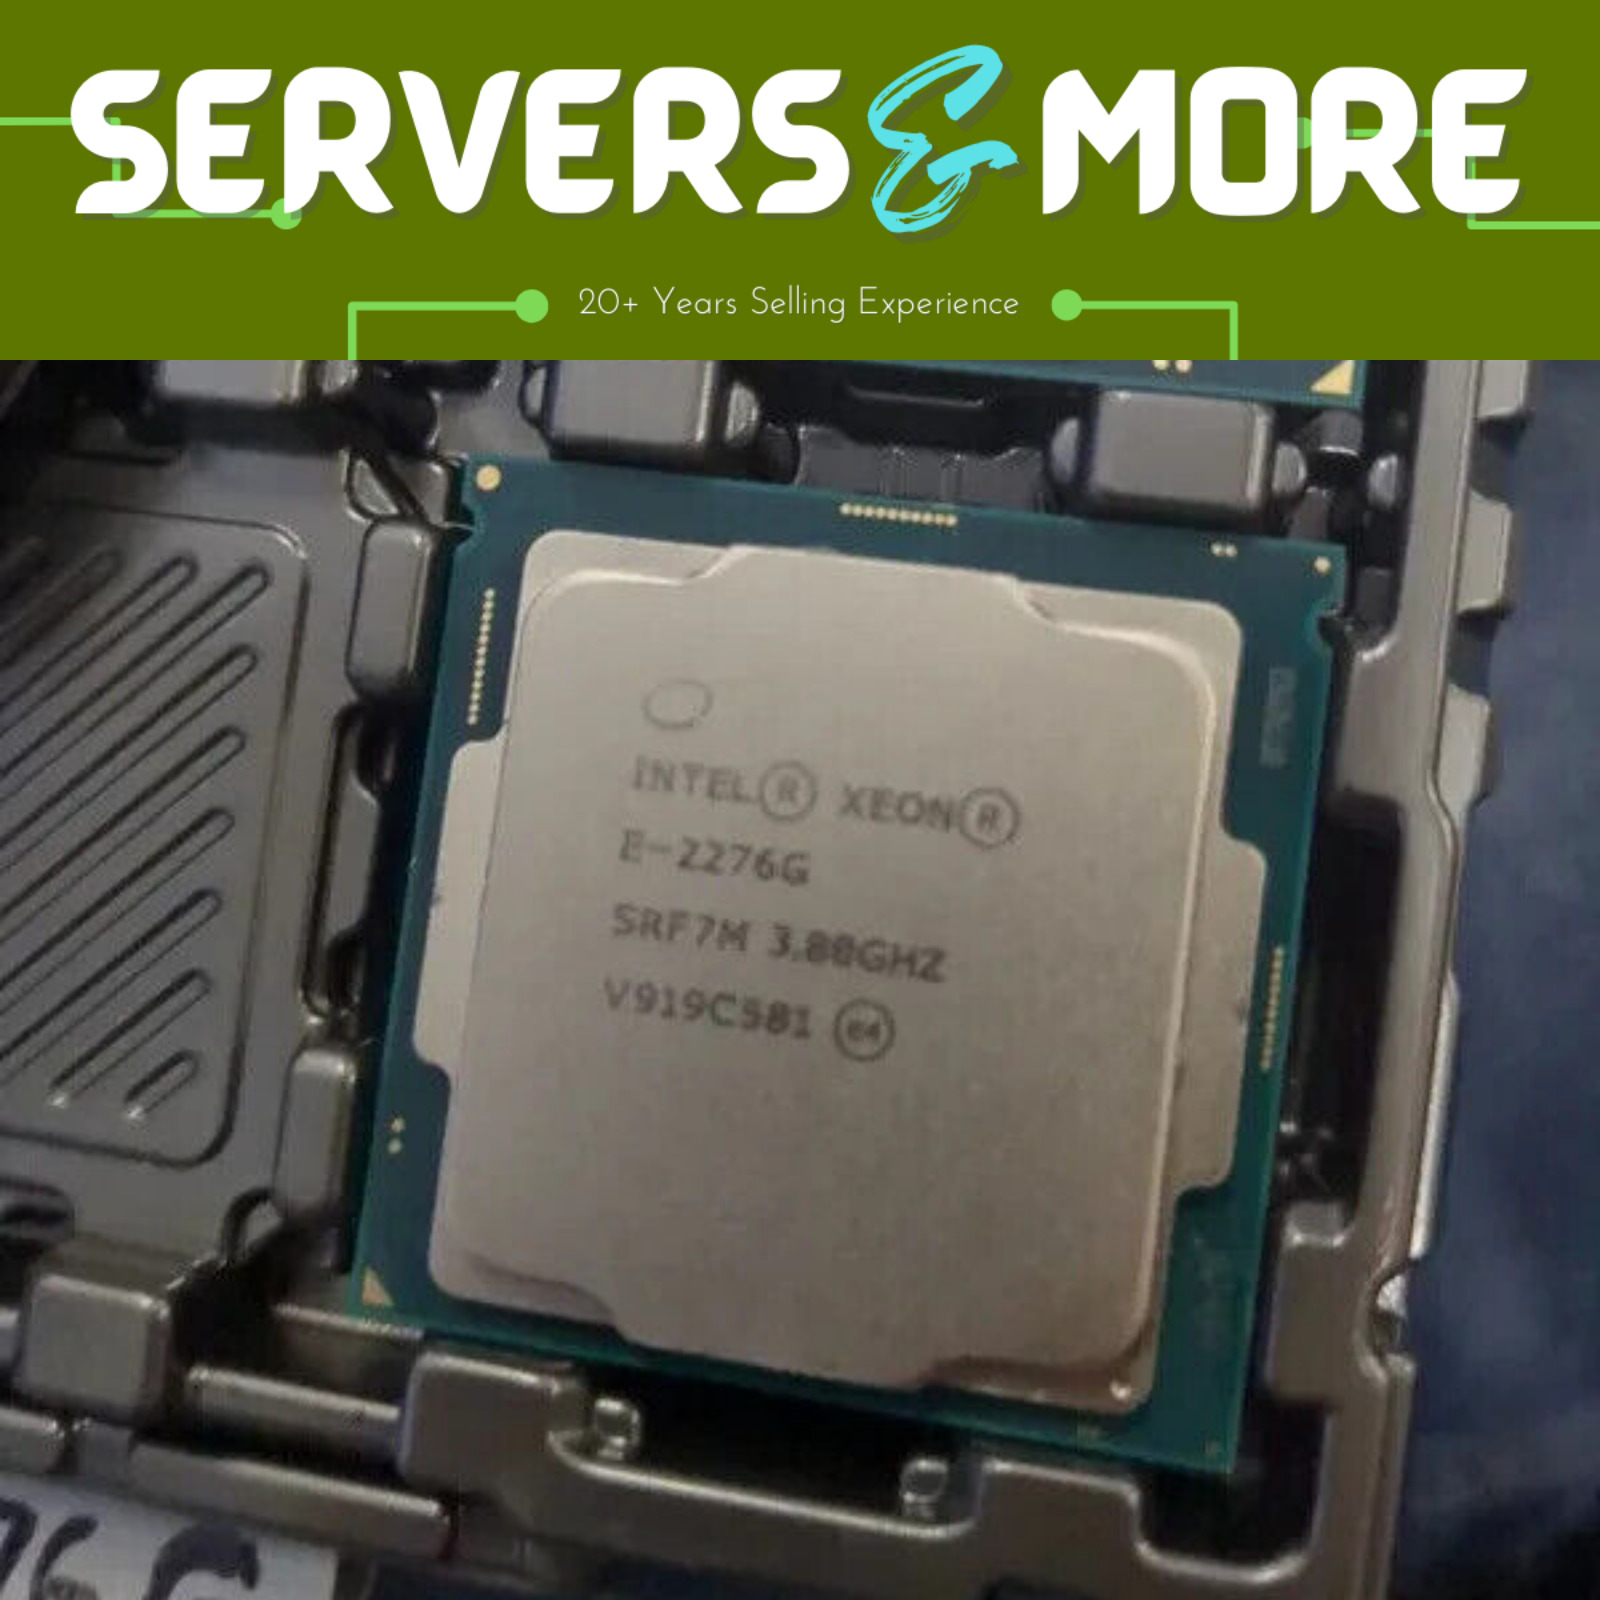 Intel Xeon E-2276G SRF7M LGA 1151 | 3.8GHz, 6 Cores | Server Processor